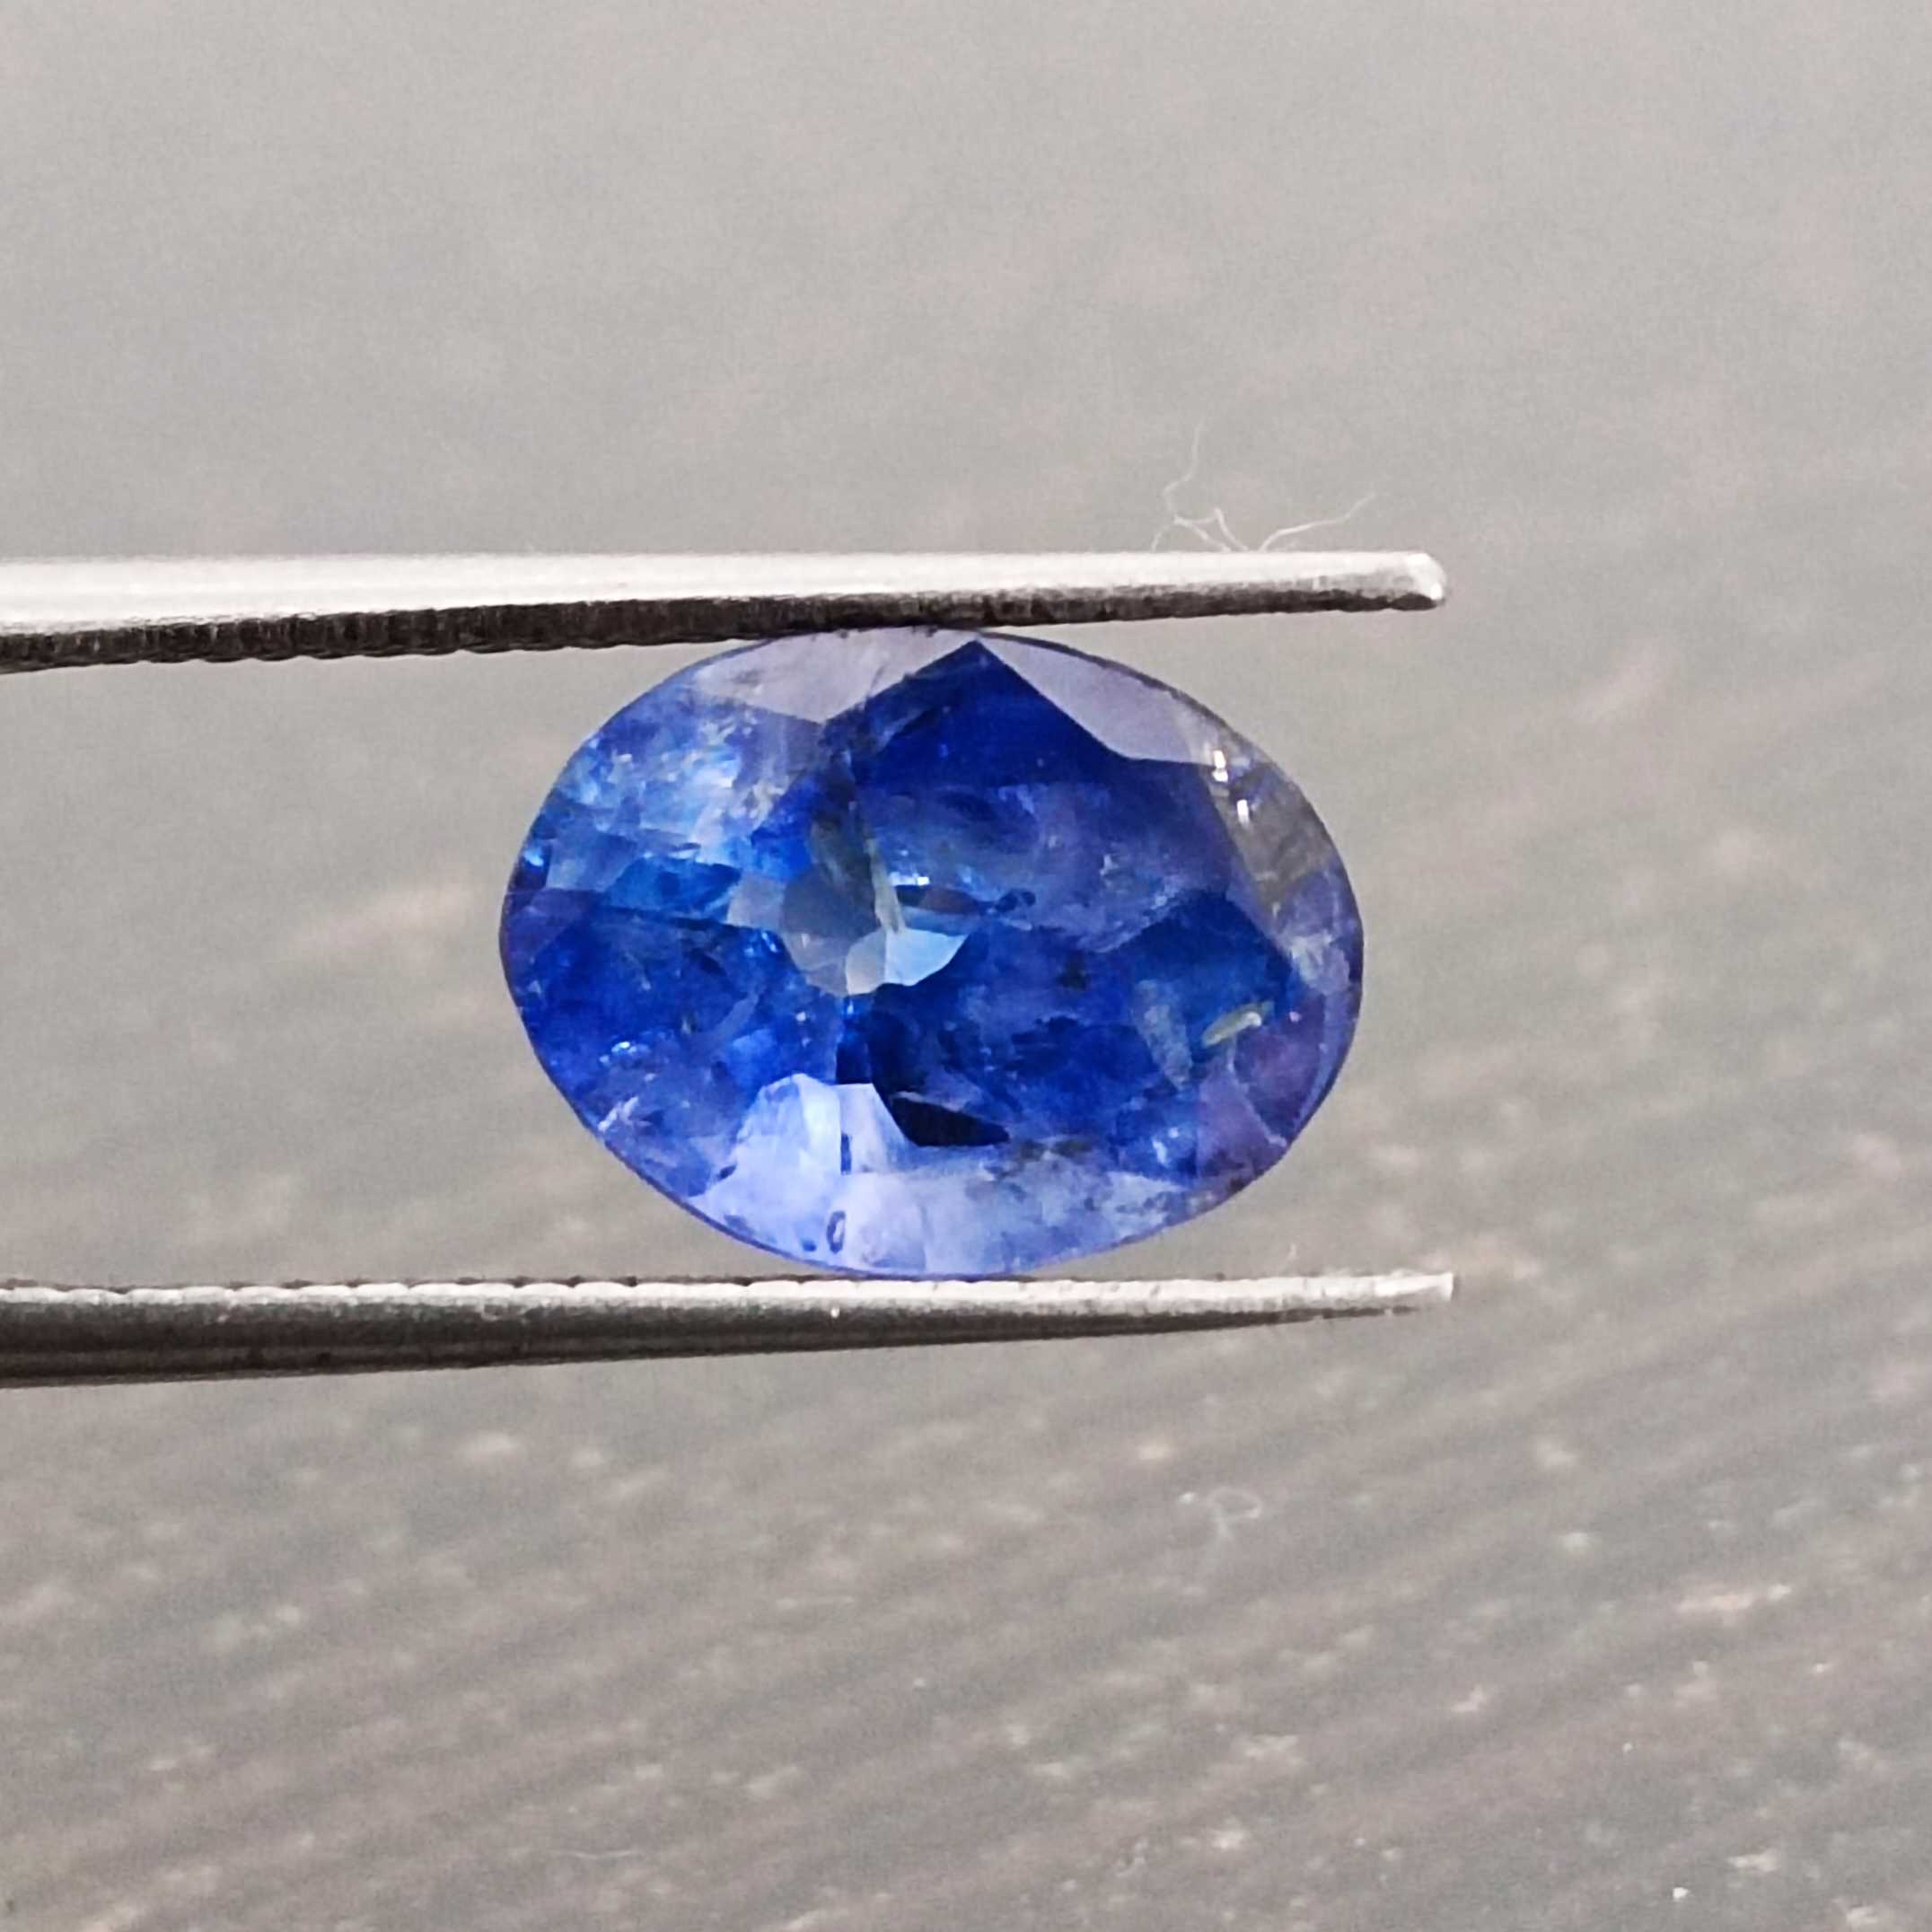 2.98ct IGI certified vivid violet blue oval Ceylon sapphire /